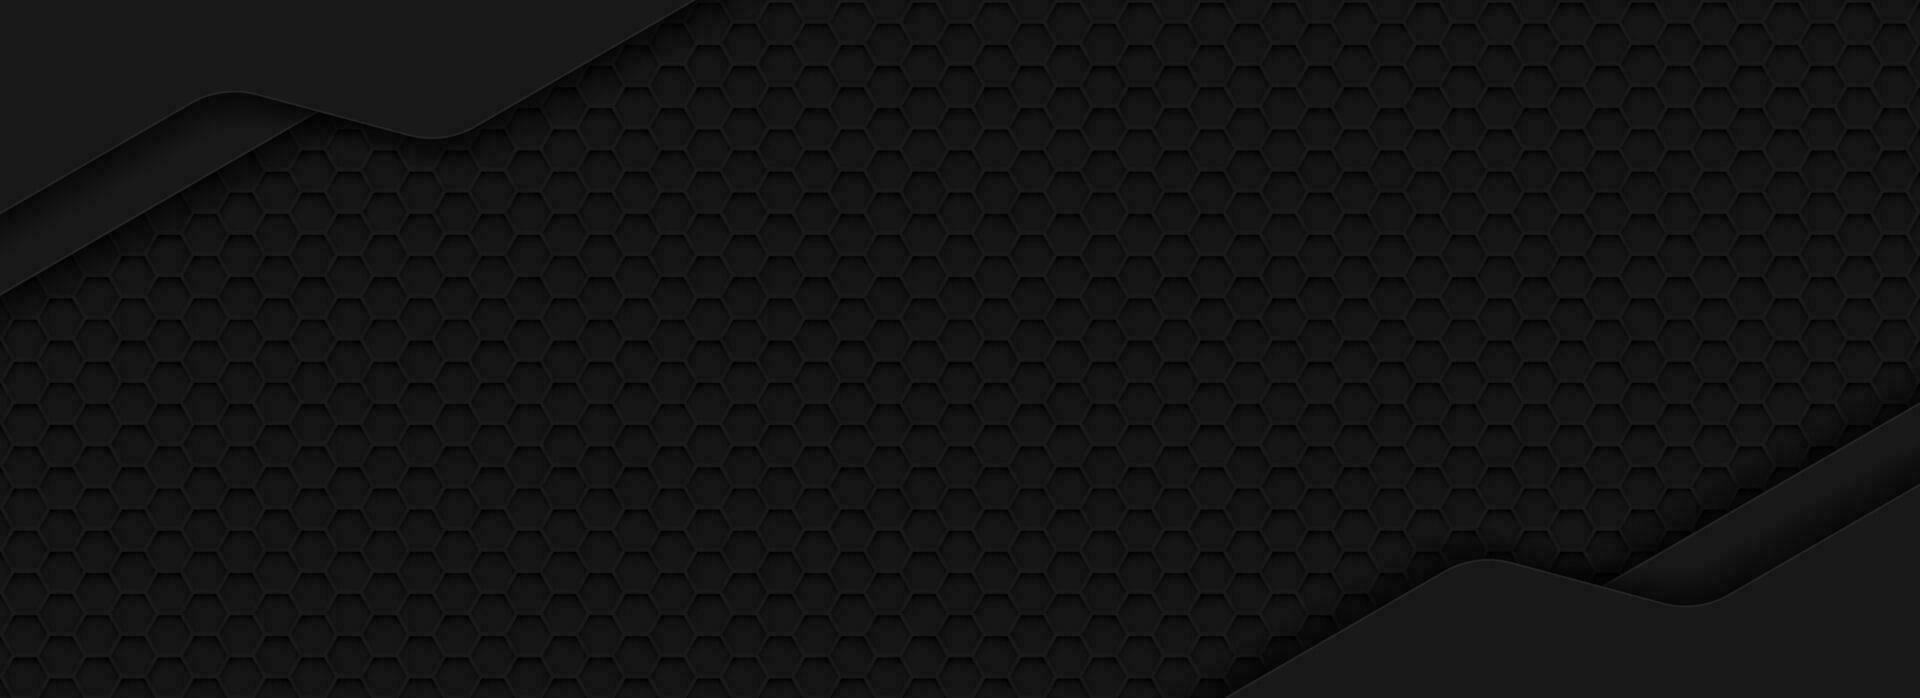 black hexagon material modern background vector